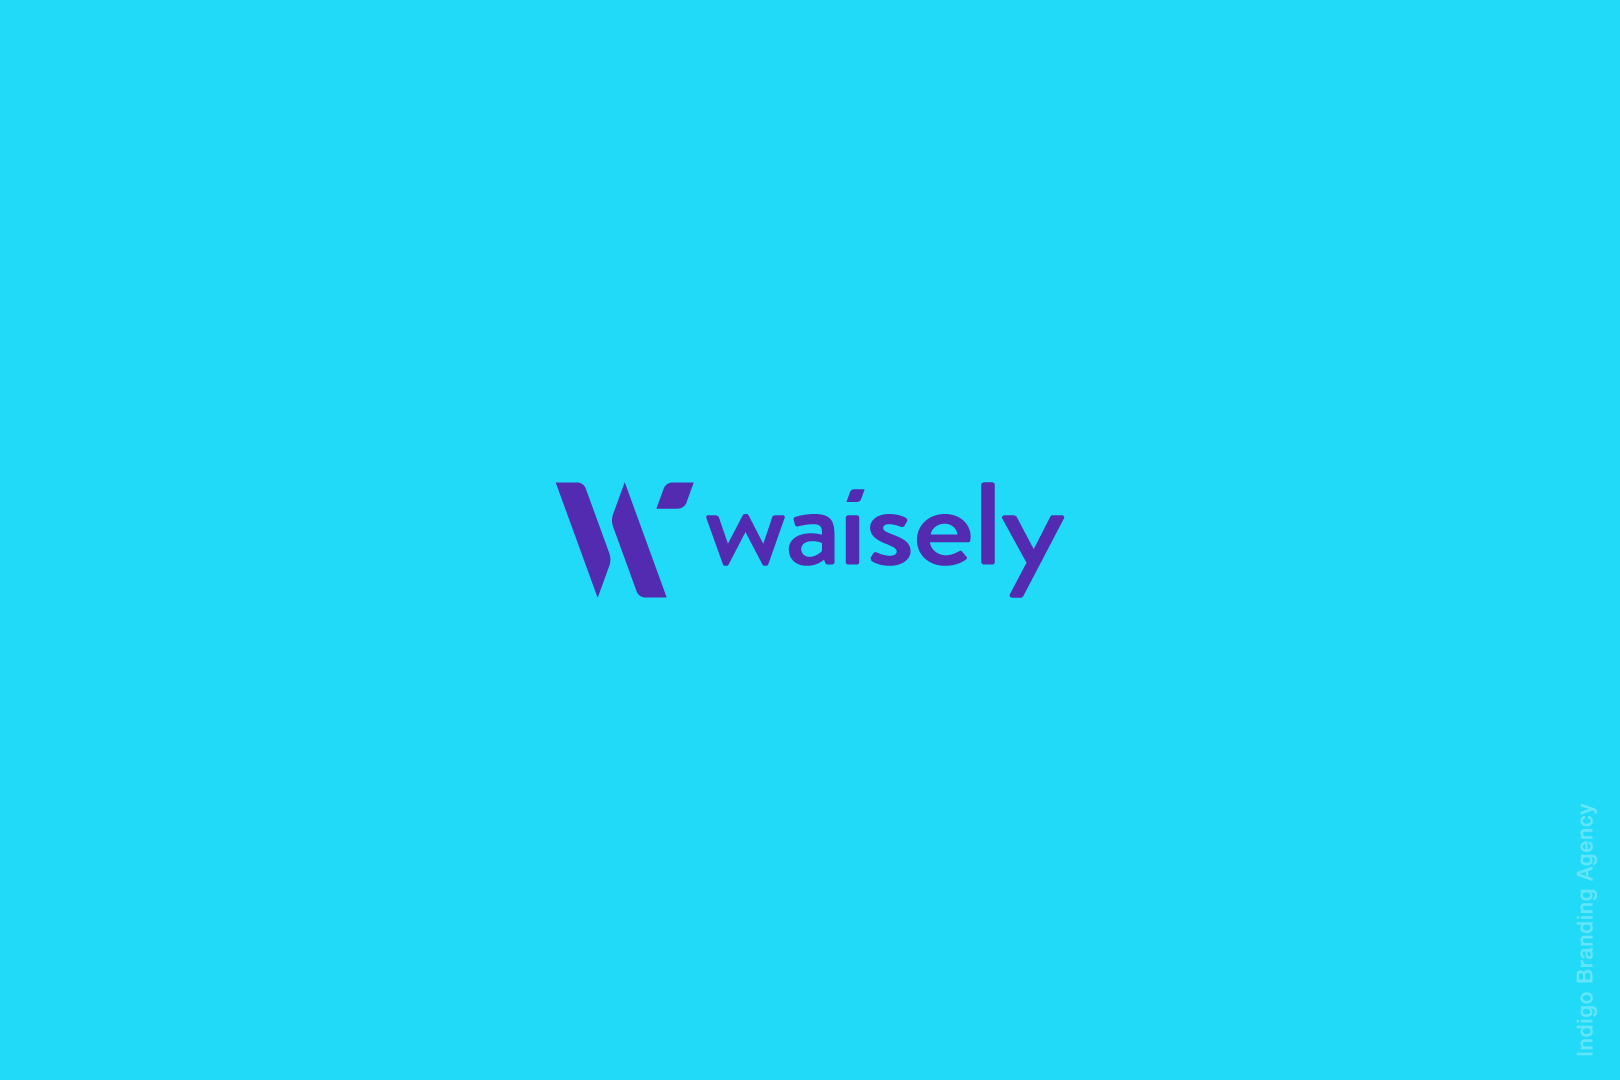 Waisely branding and logo design by Indigo branding